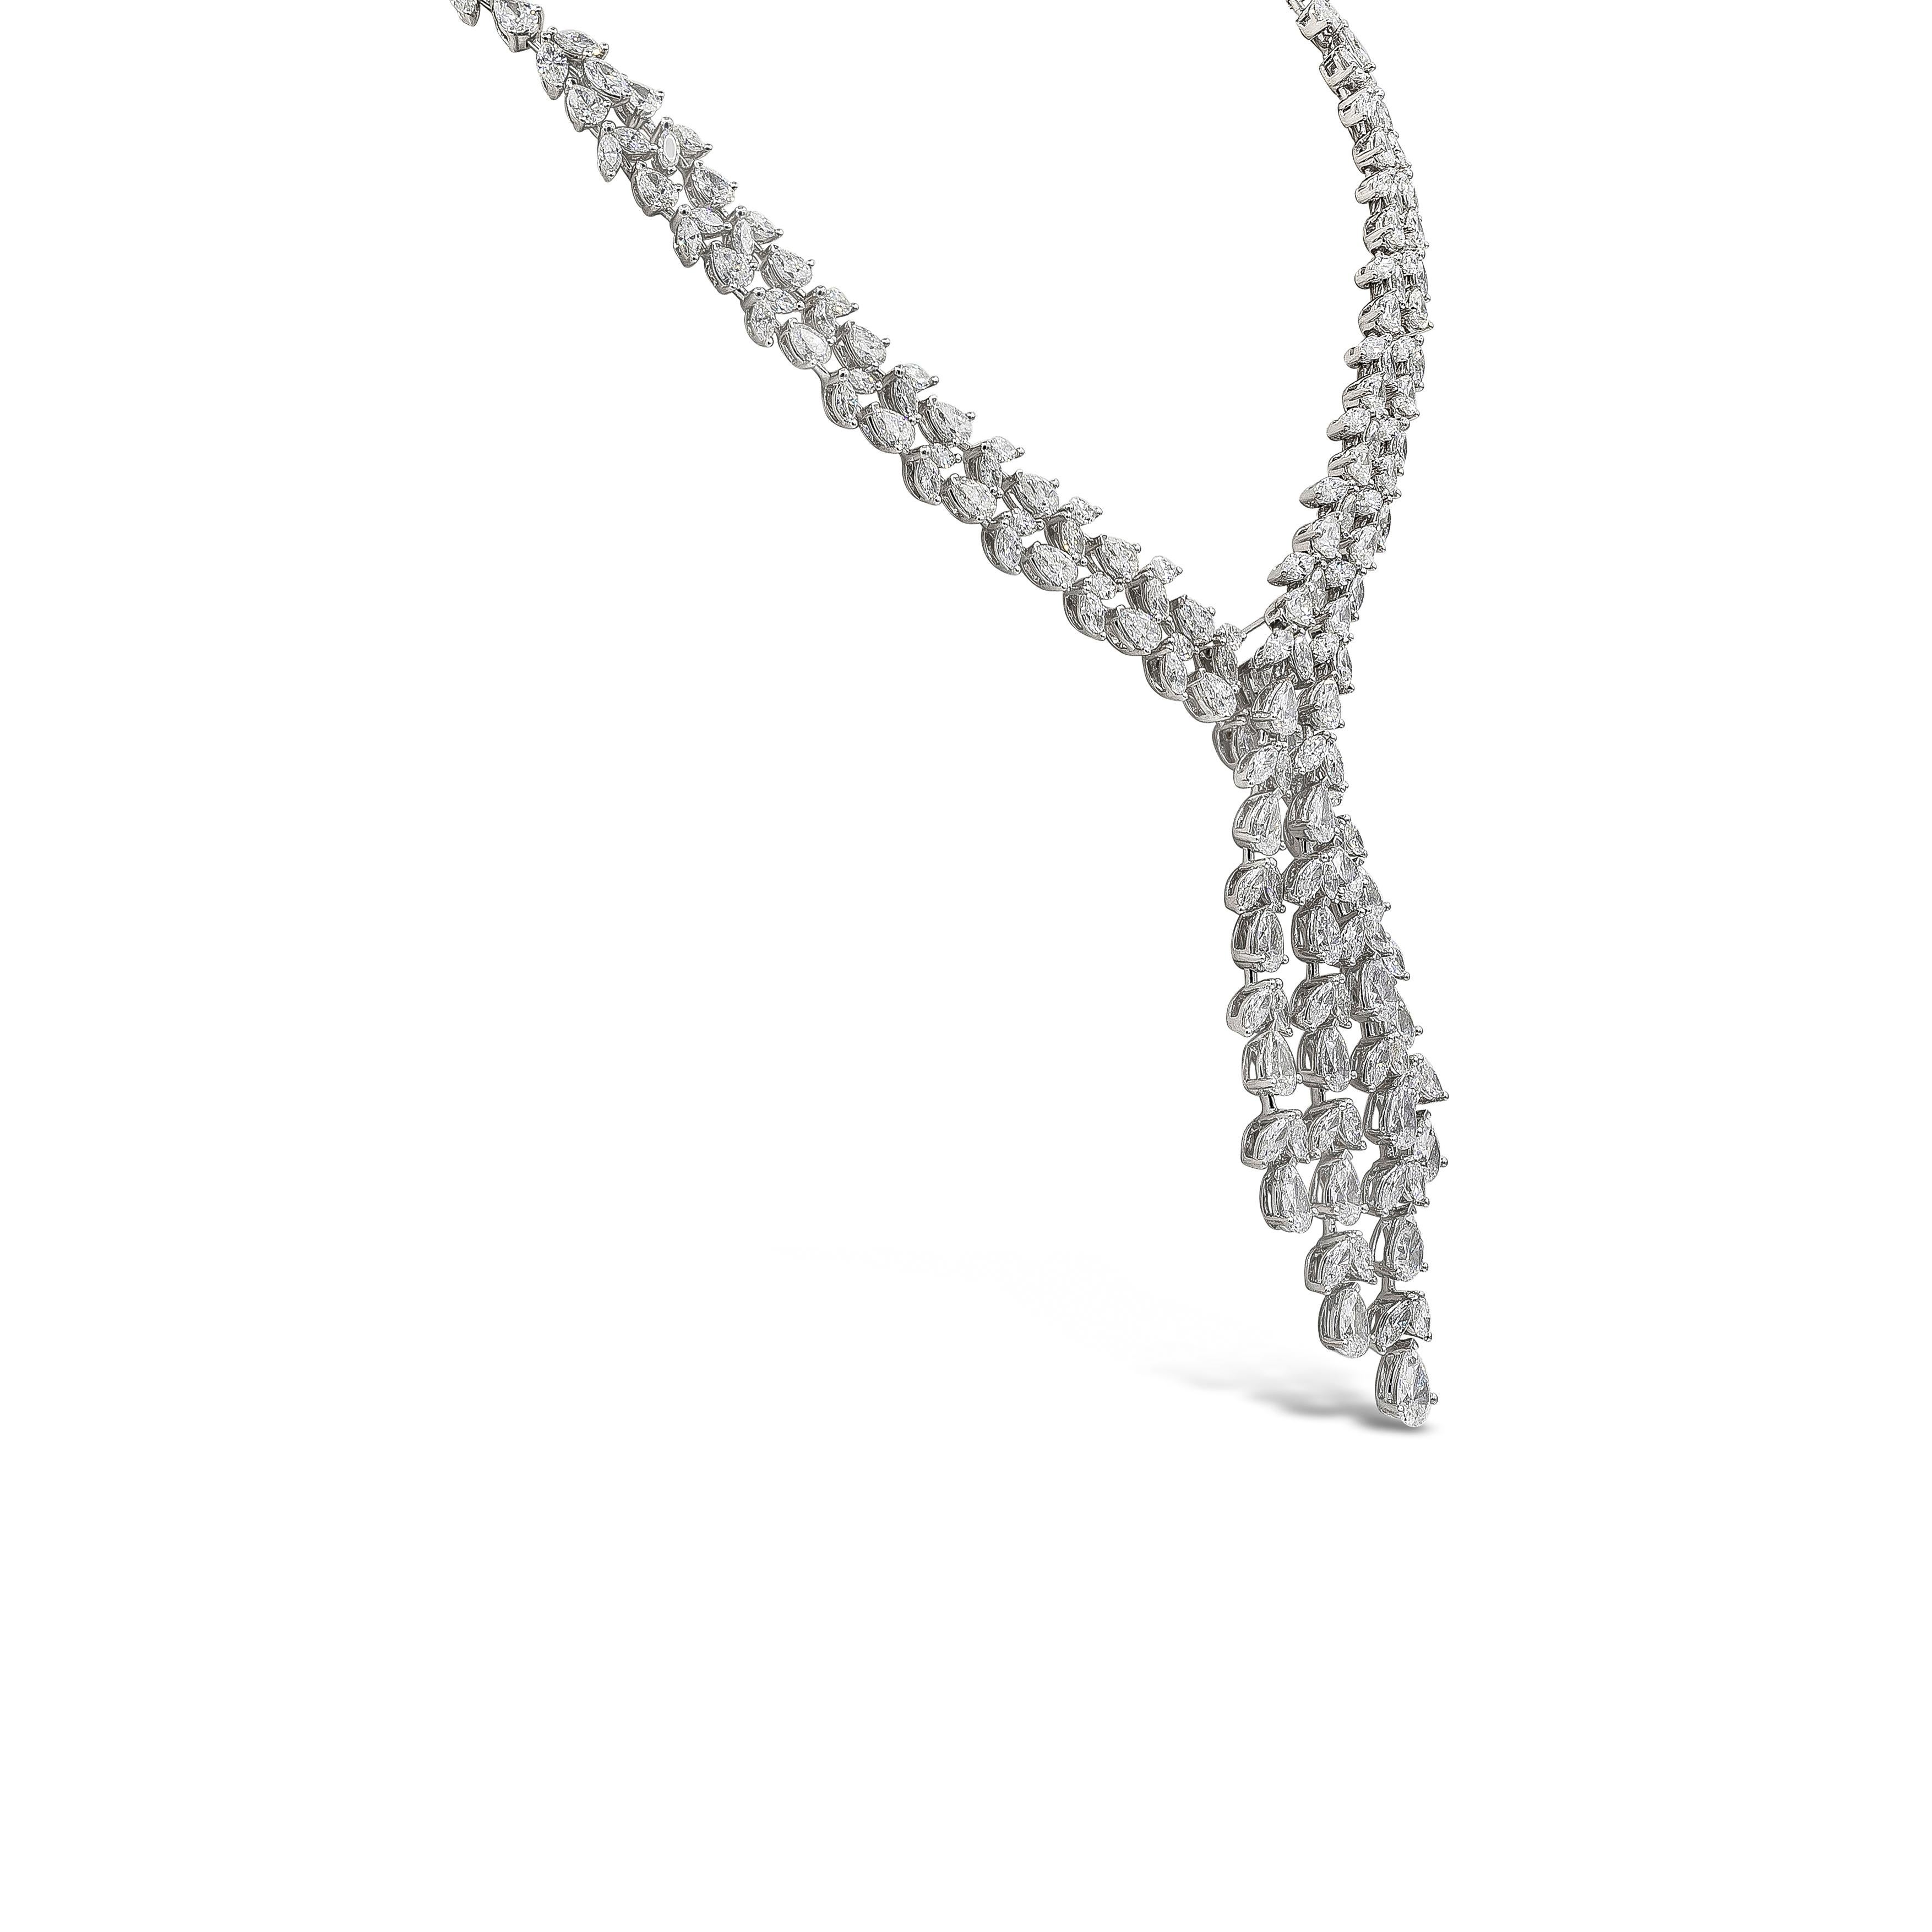 Contemporary Roman Malakov, 40.94 Carat Pear and Marquise Cut Diamond Drop Necklace